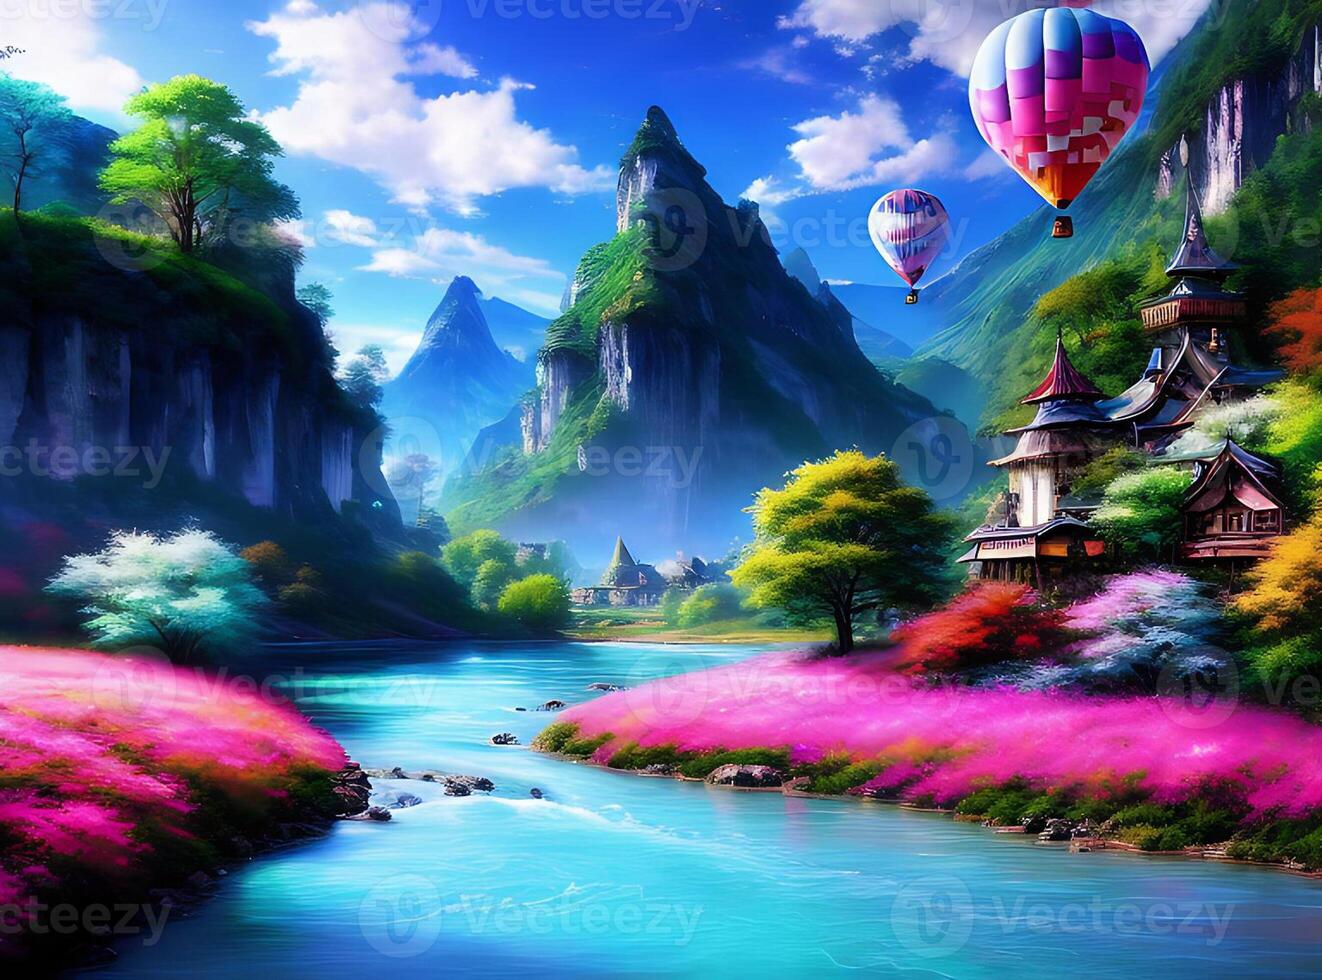 Wallpaper landscape, painting, fantasy art, anime, water, nature, sky, clouds, Earth, bridge, world, ART, mountain, balloons, screenshot, computer wallpaper, special effects, organism, photo